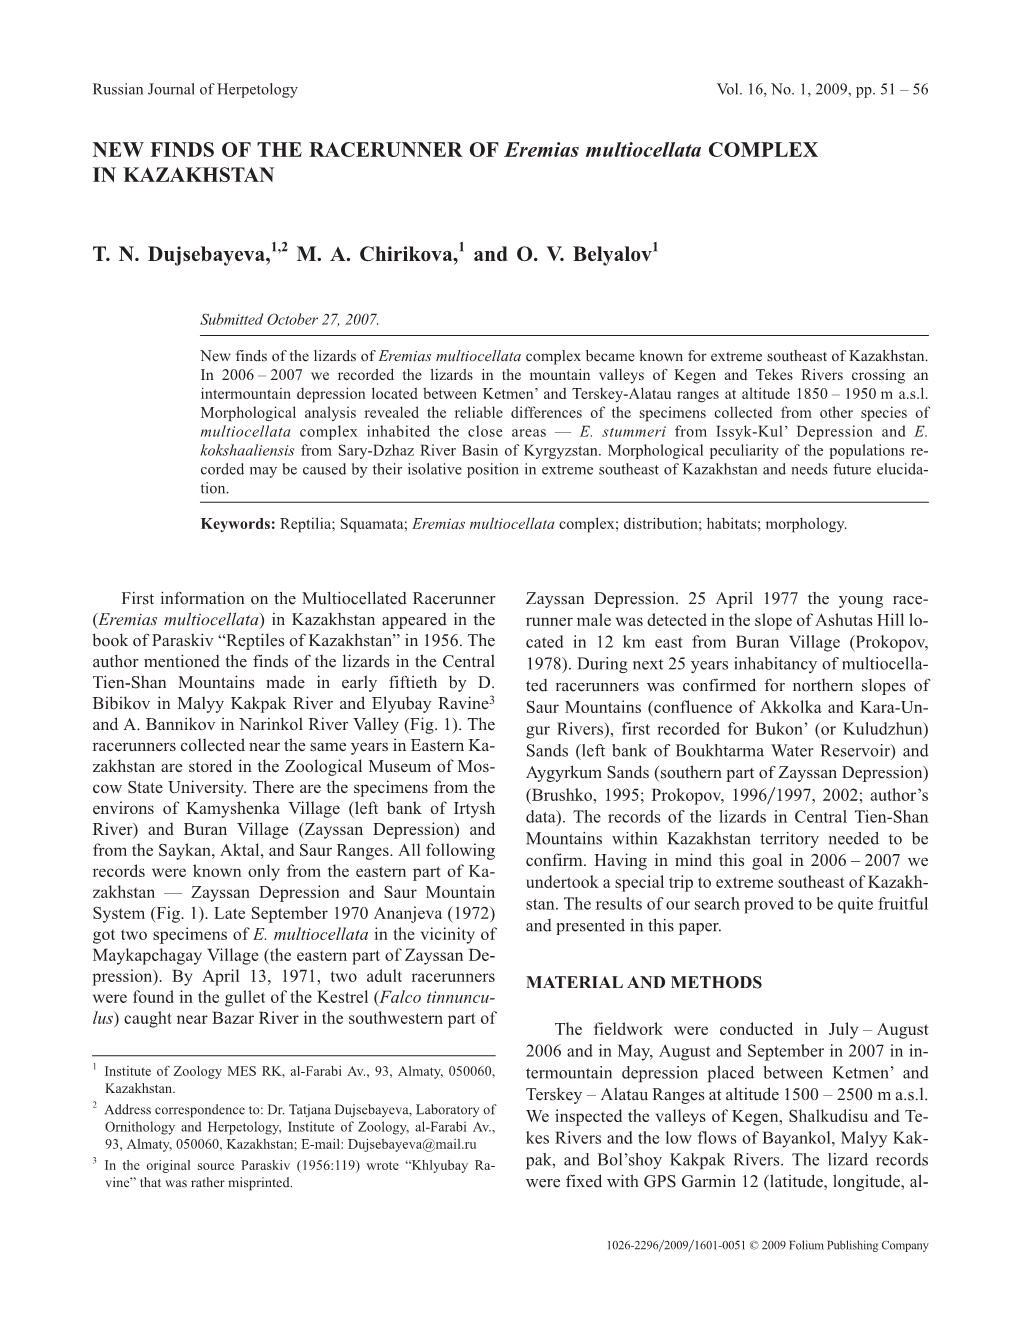 NEW FINDS of the RACERUNNER of Eremias Multiocellata COMPLEX in KAZAKHSTAN T. N. Dujsebayeva,1,2 M. A. Chirikova,1 and O. V